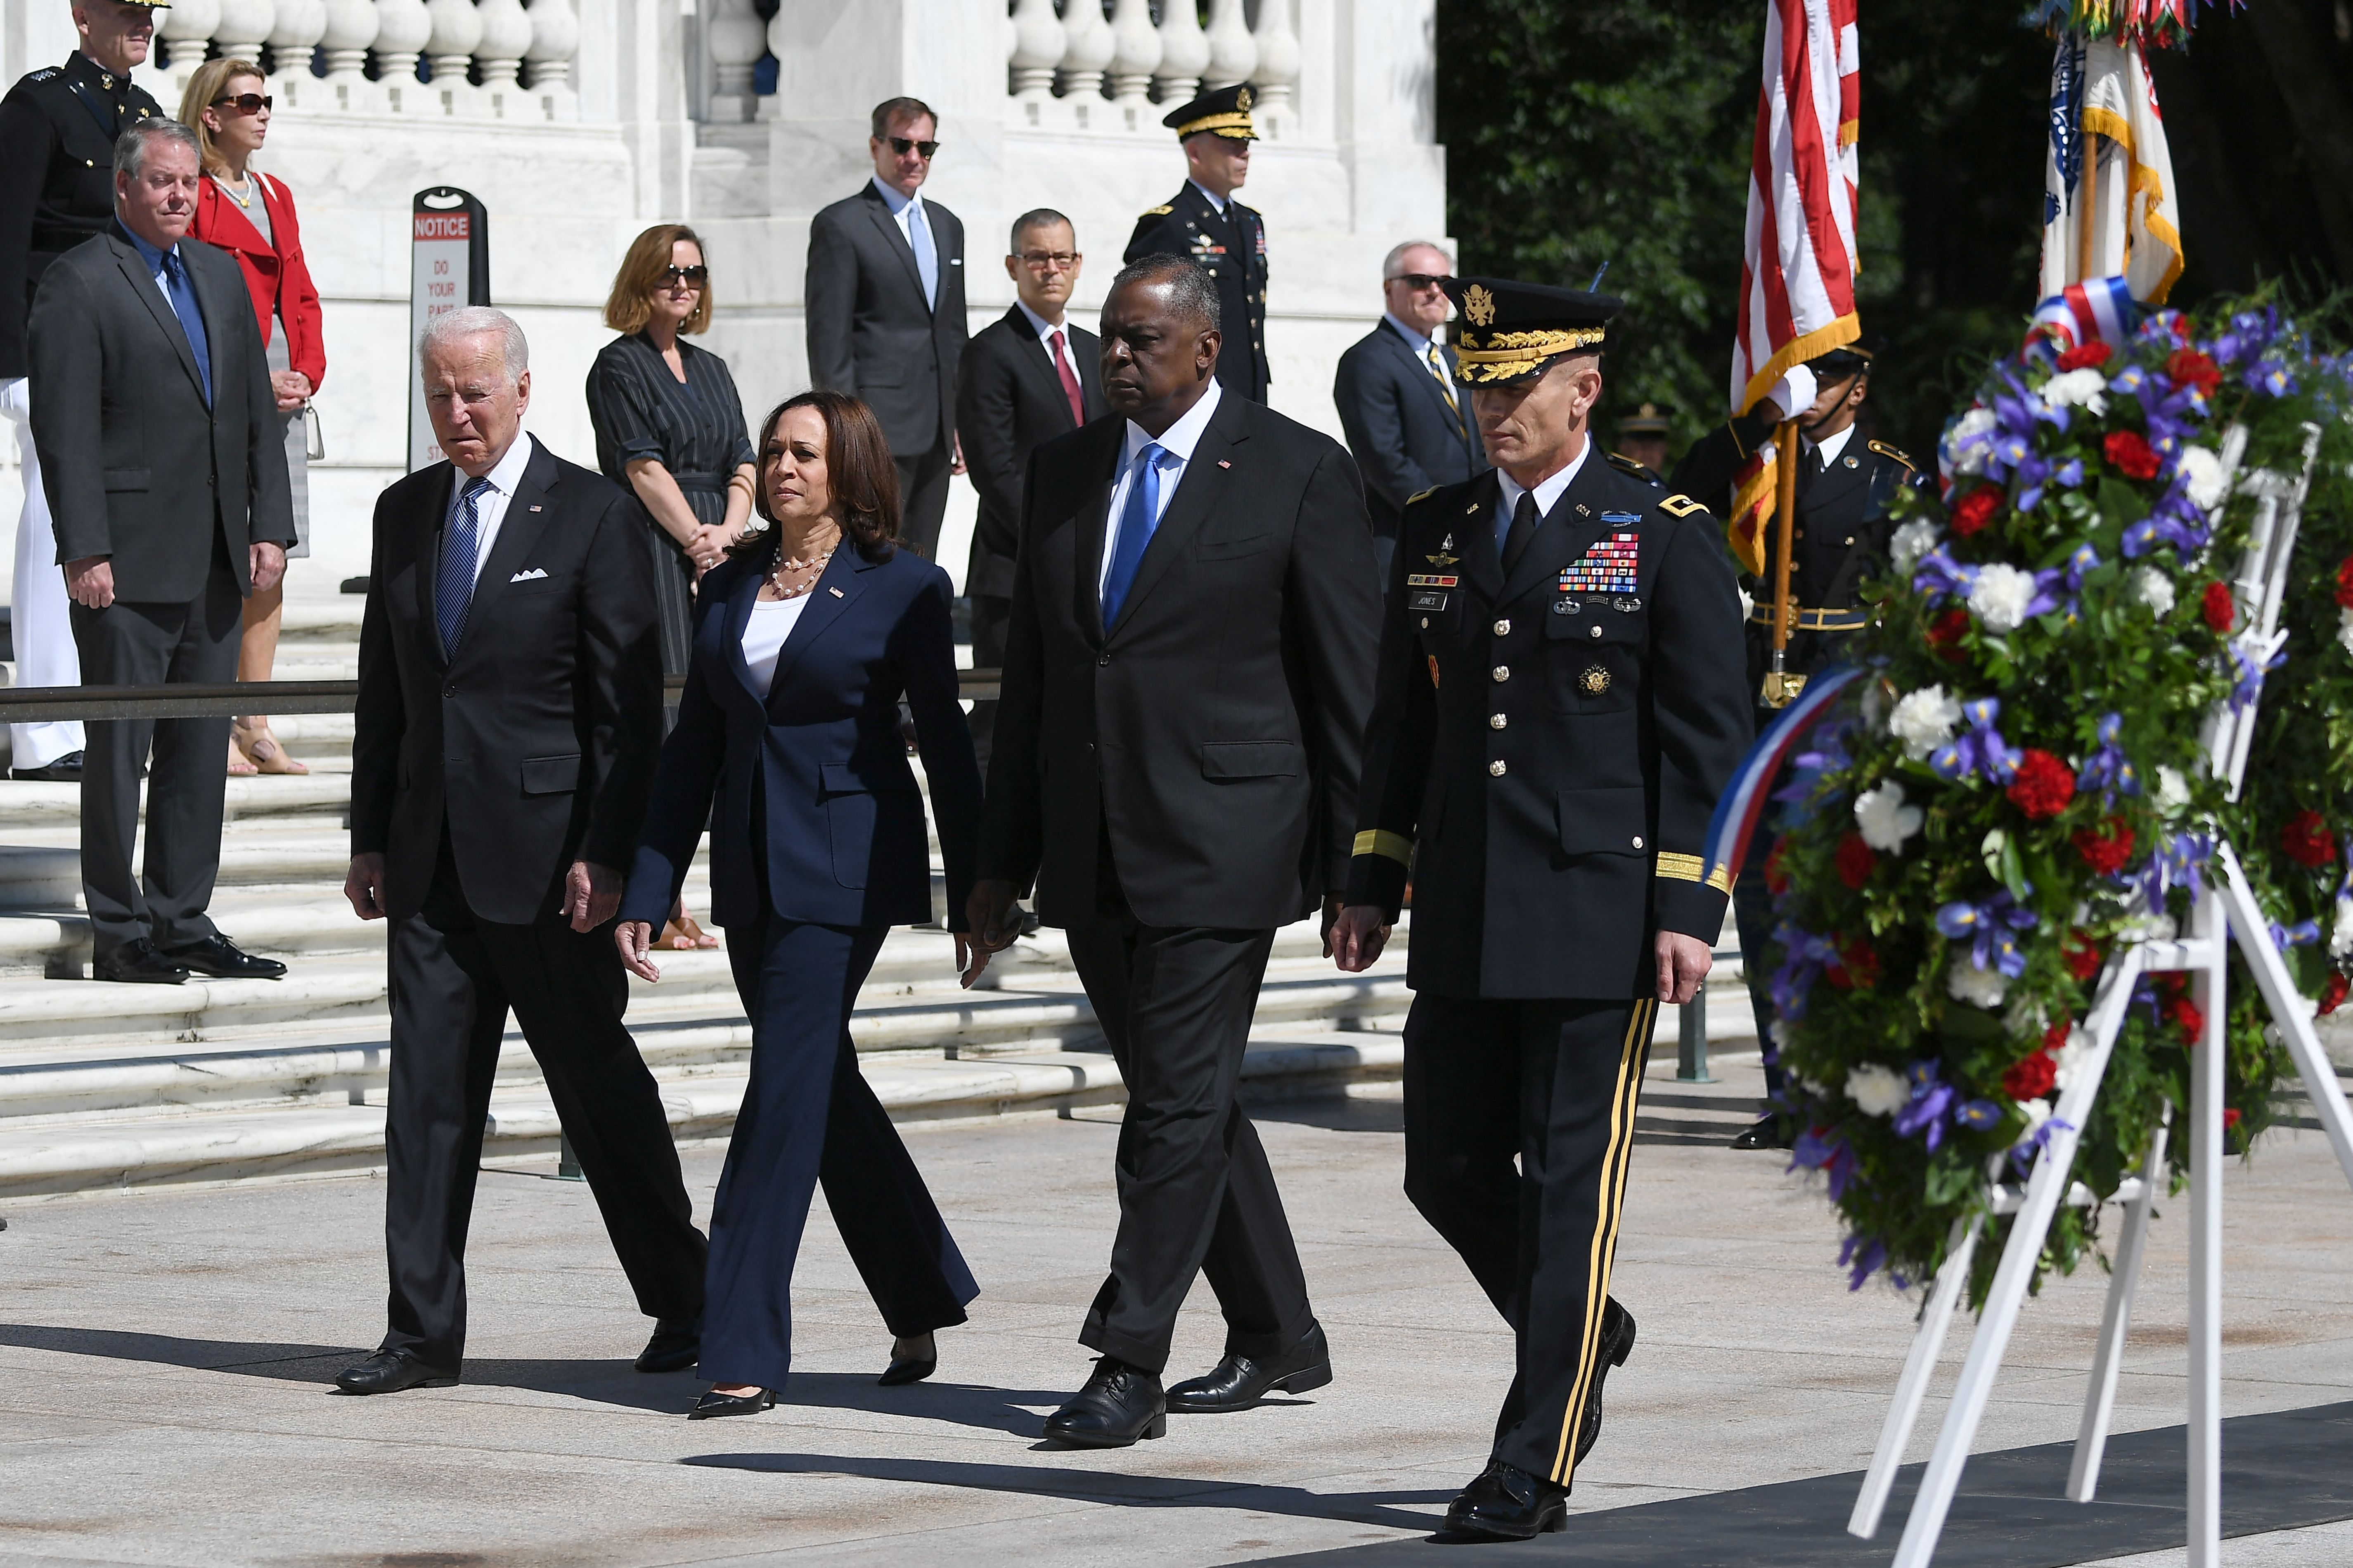 Biden, VP Kamala Harris, Defense Secretary Lloyd Austin walk in a line in front of wreaths and American flags